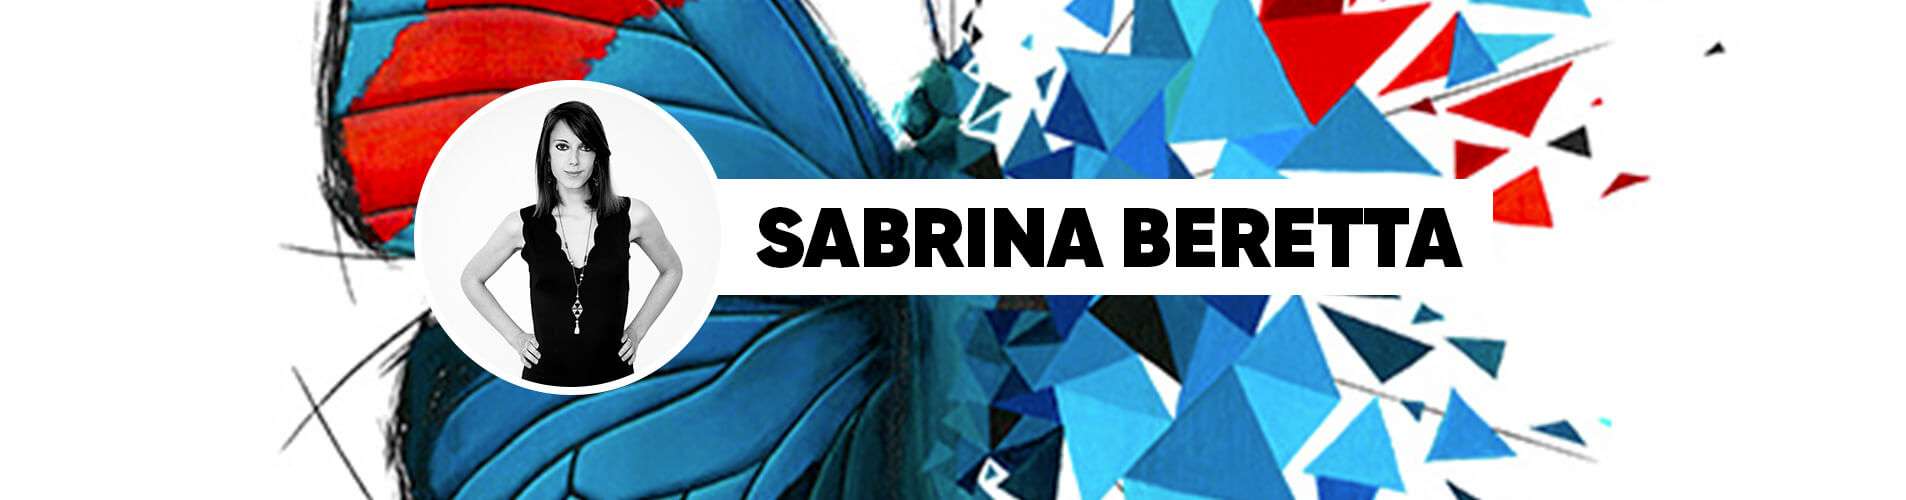  Visuel expo galerie ephemere Sabrina Beretta